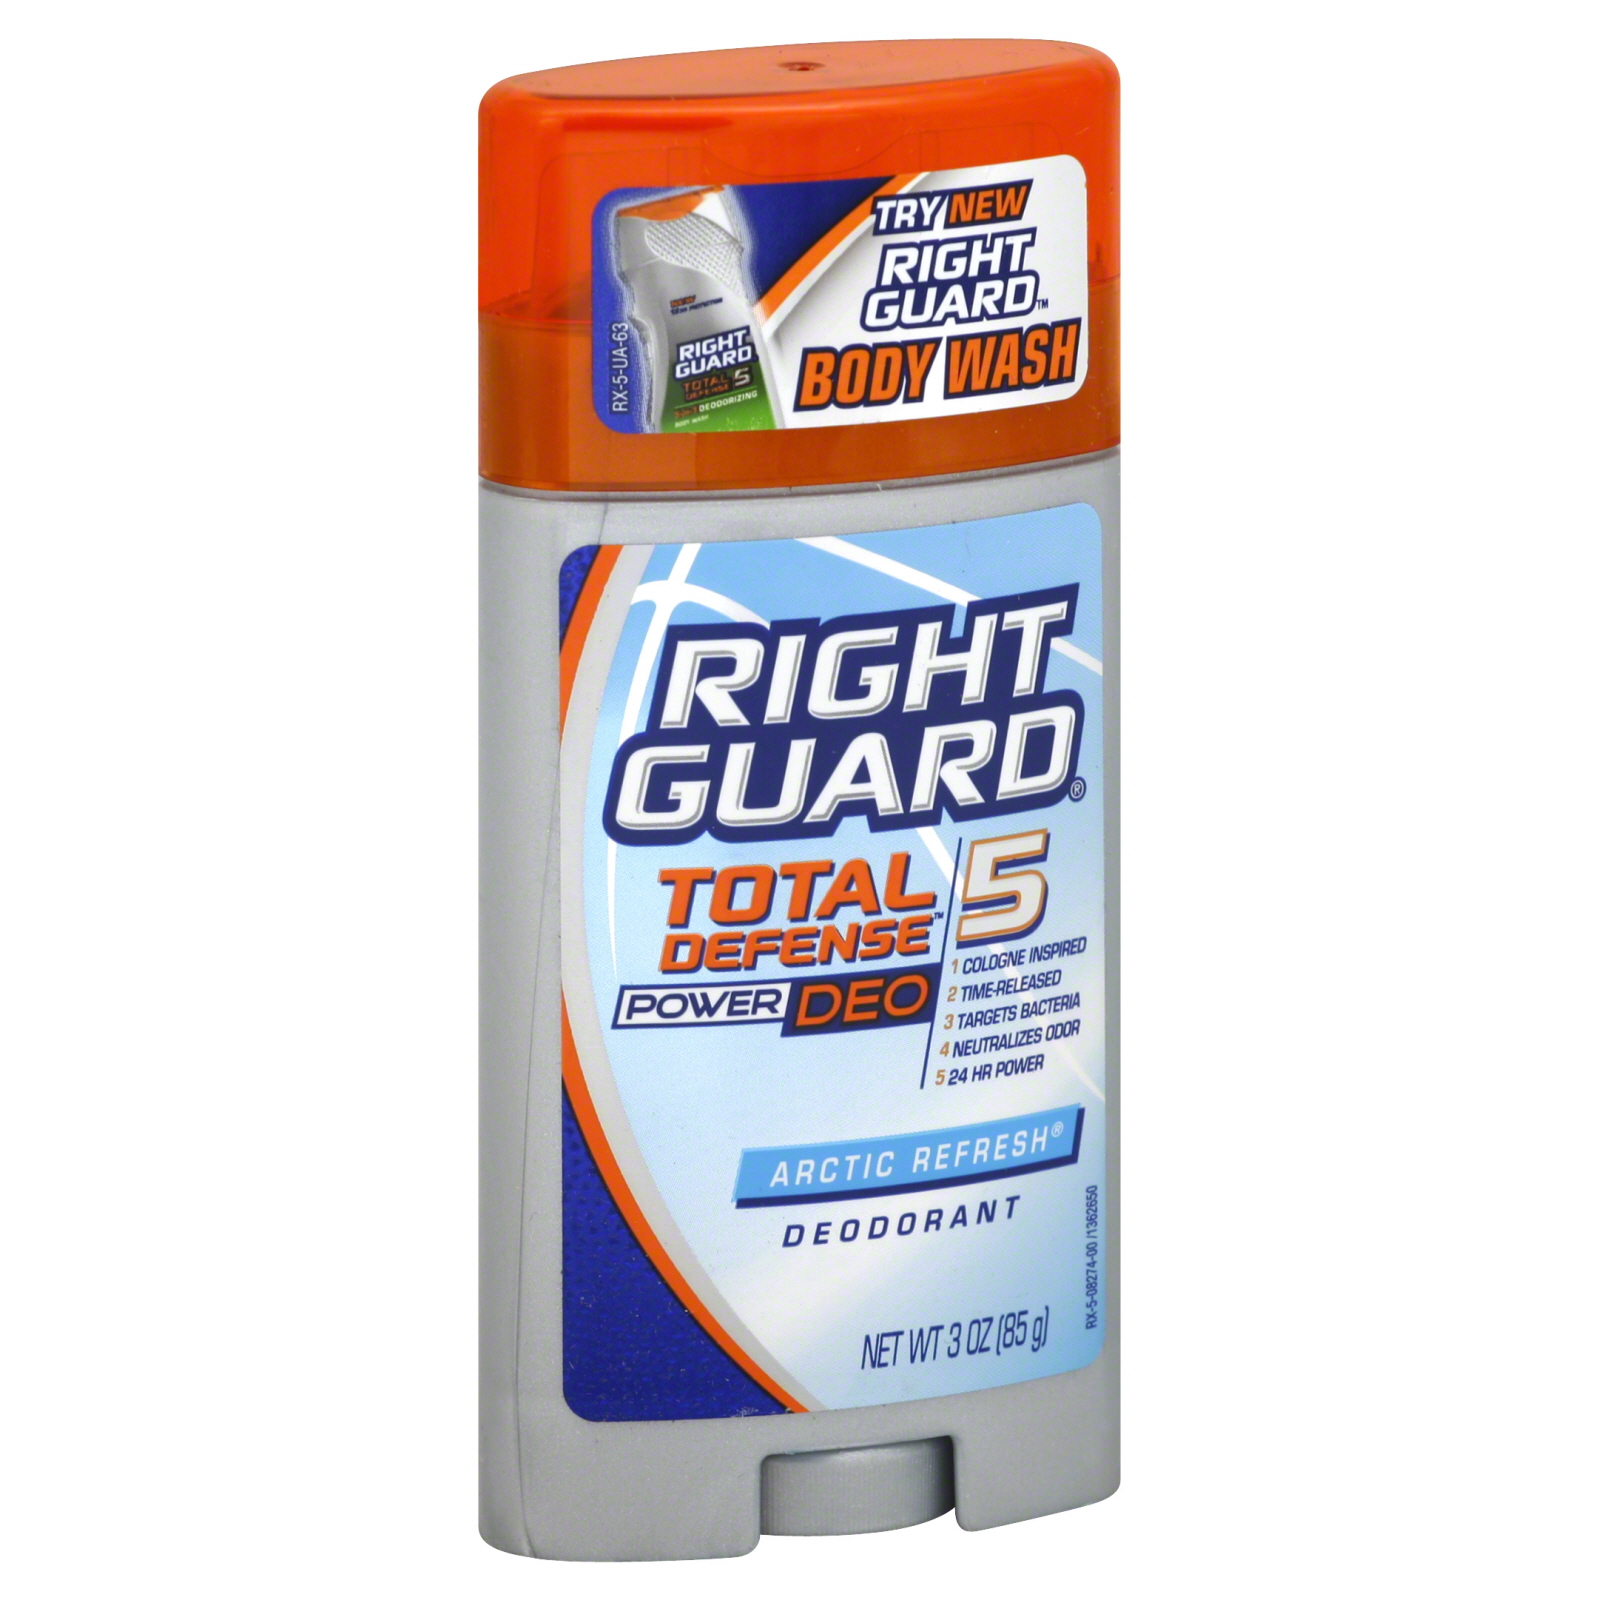 Right Guard Total Defense 5 Power Deo Deodorant, Arctic Refresh, 3 oz (85 g)